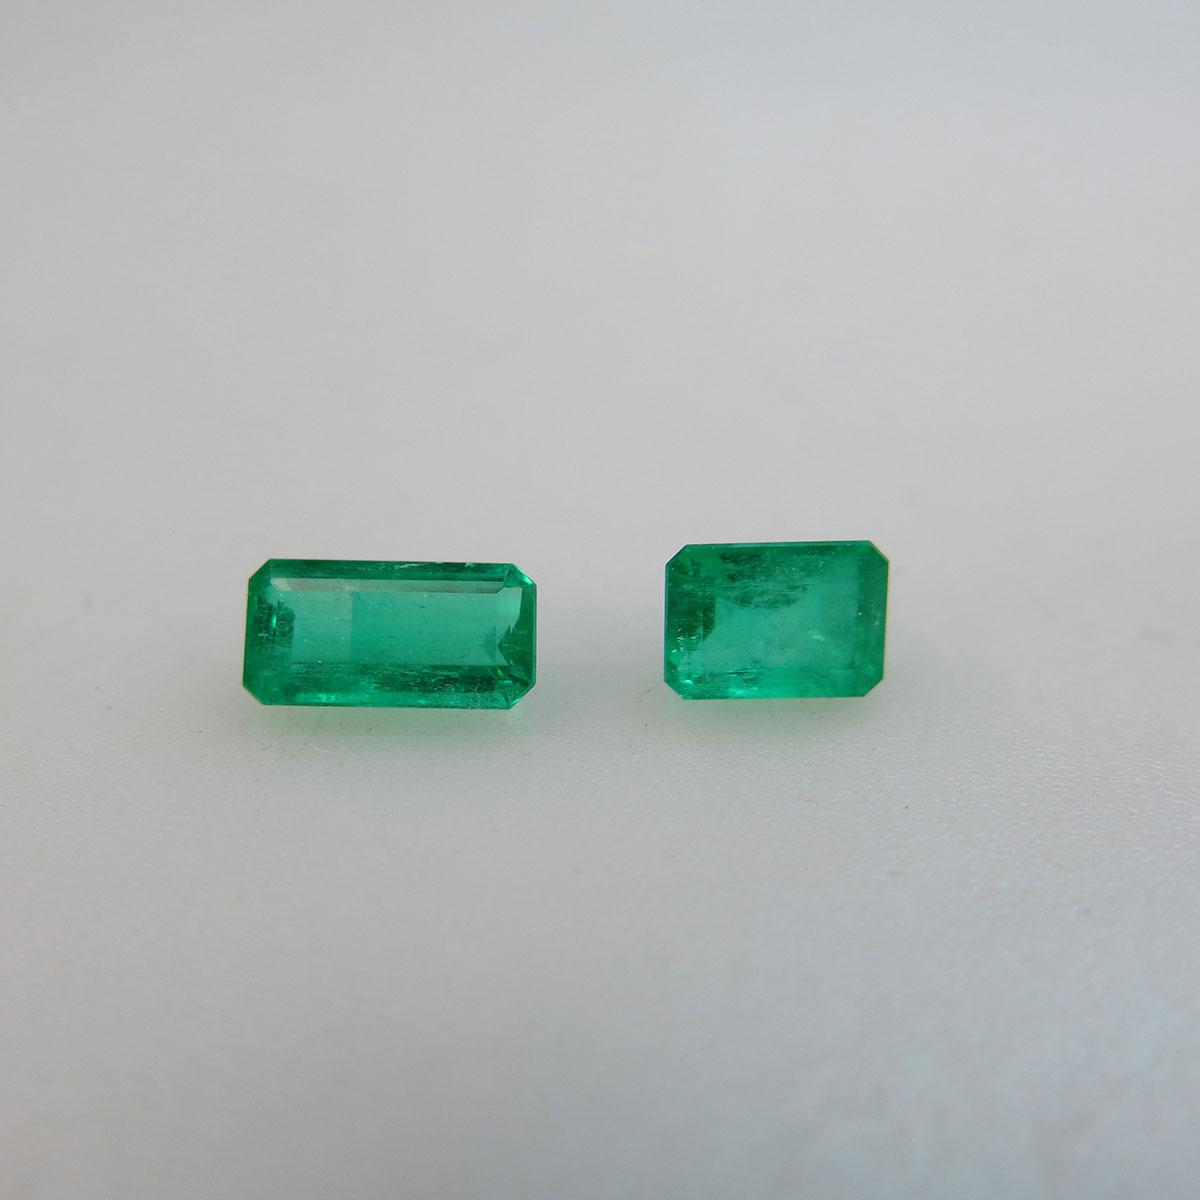 2 Unmounted Emerald Cut Emeralds